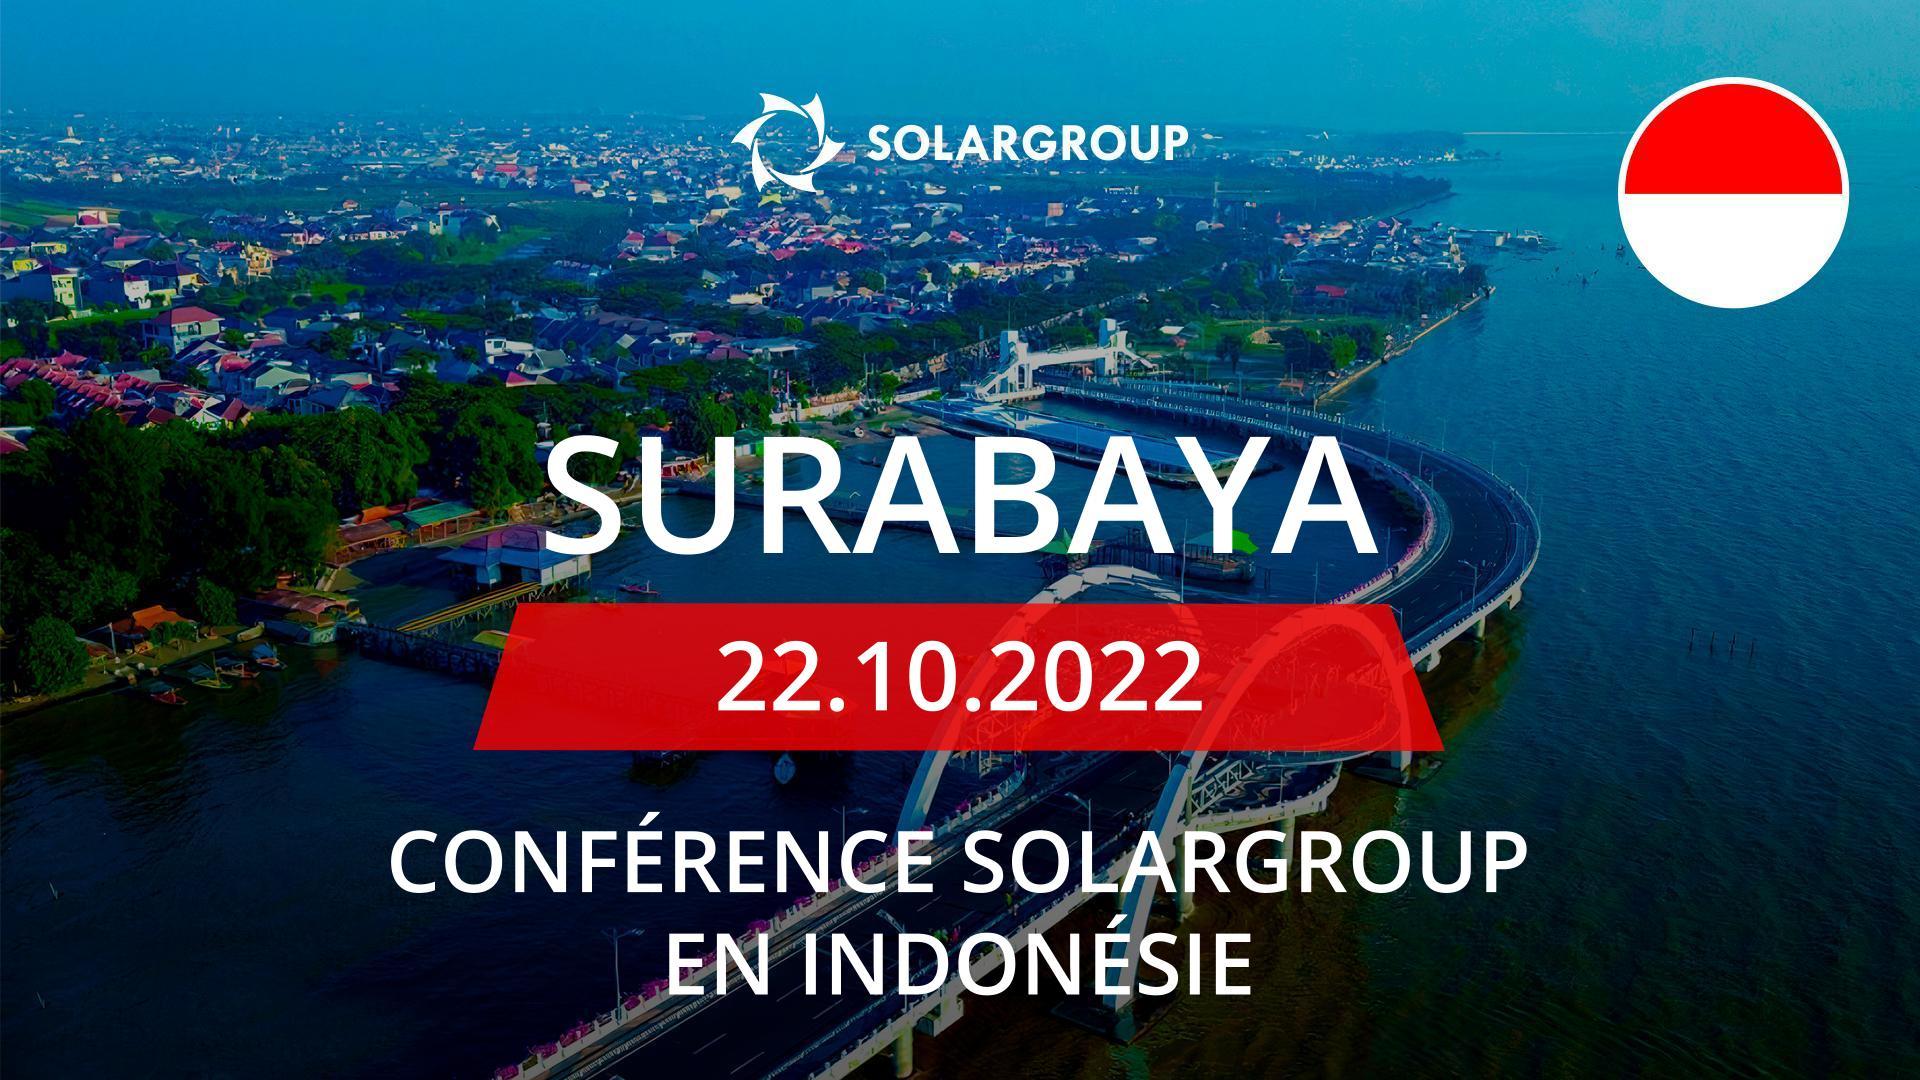 Conférence SOLARGROUP en Indonésie : le 22 octobre, Surabaya